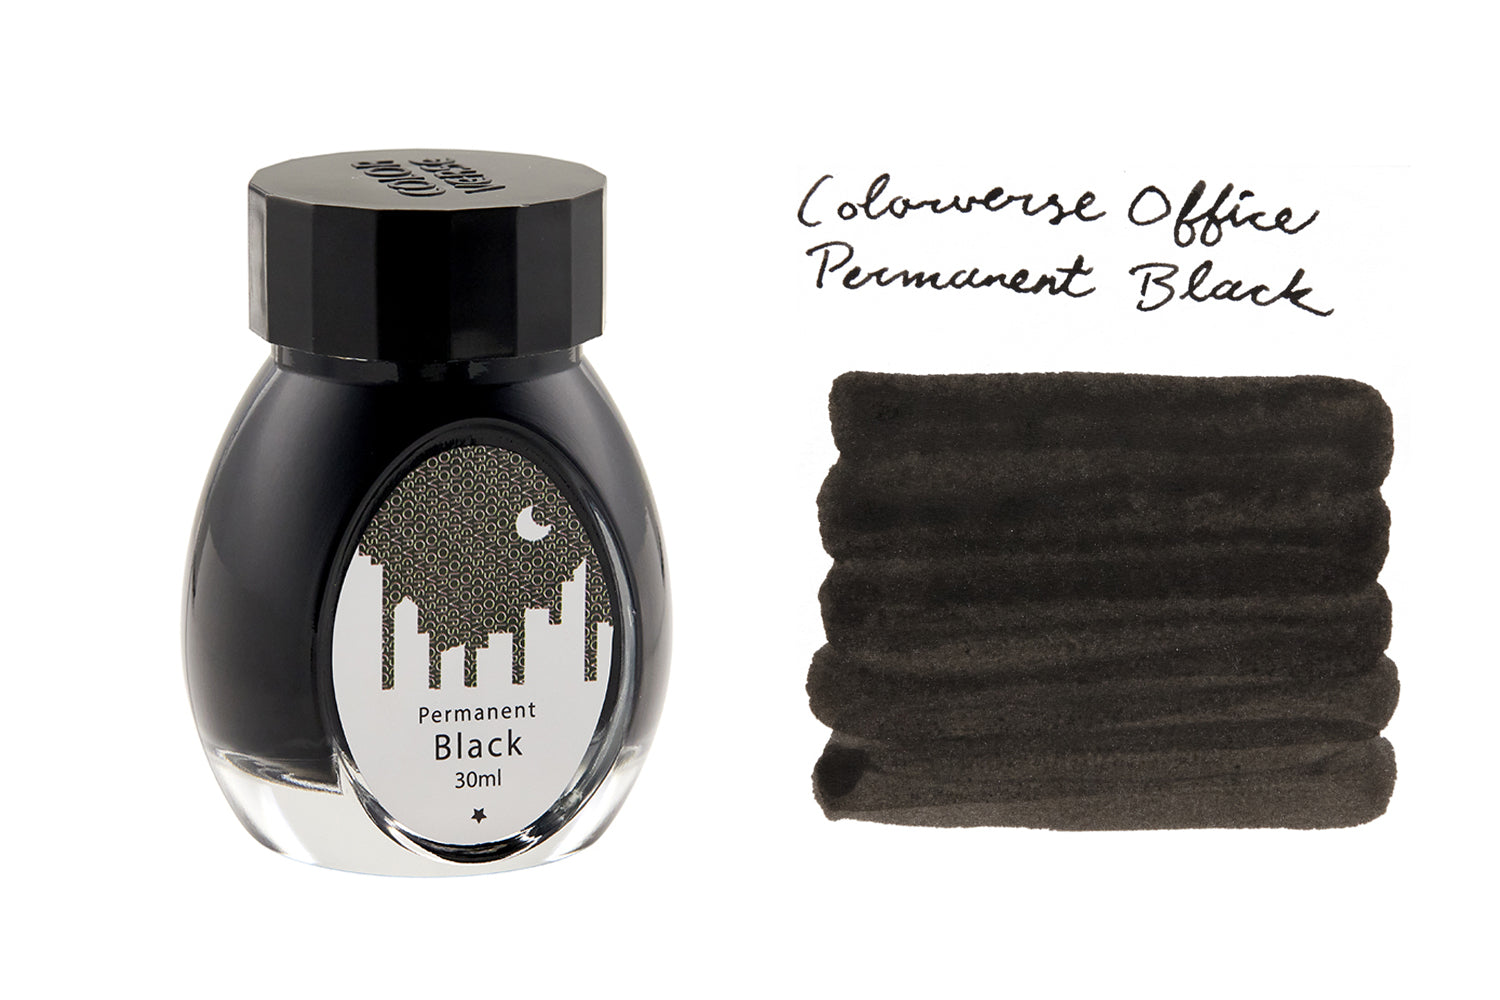 Colorverse Black Ink - Office Series - 30 ml Bottle